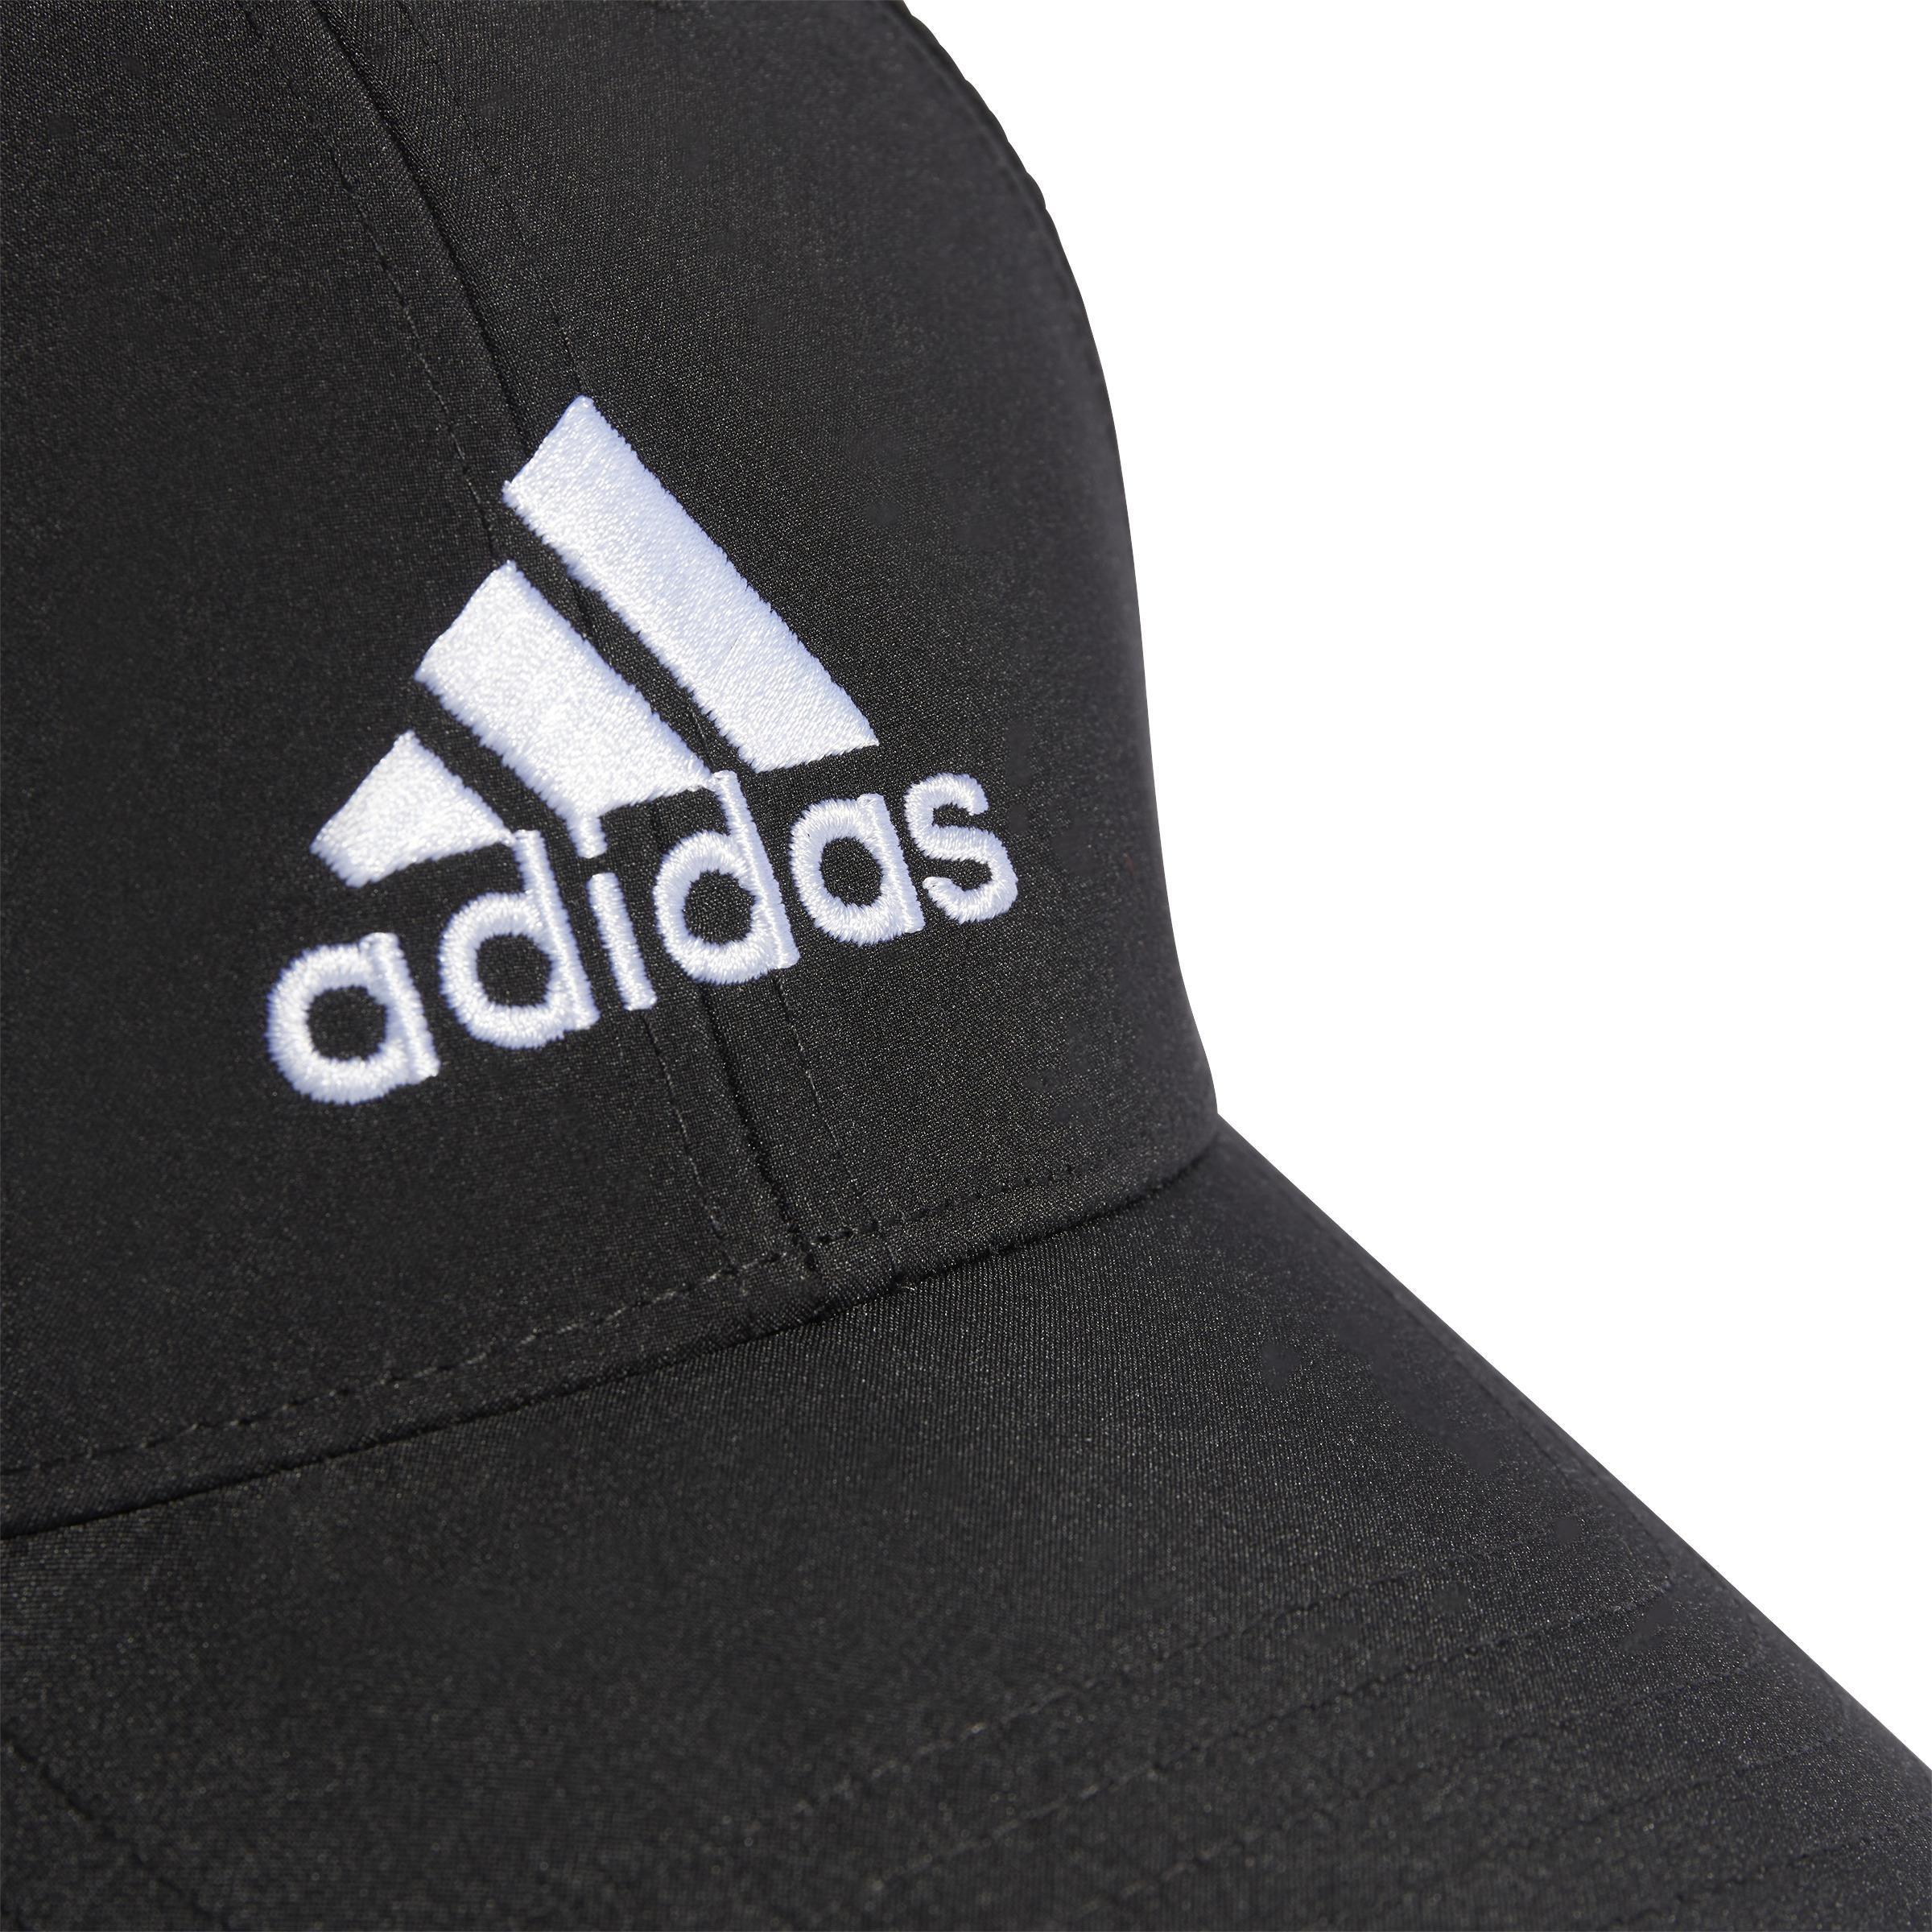 adidas - Unisex Embroidered Logo Lightweight Baseball Cap, Black